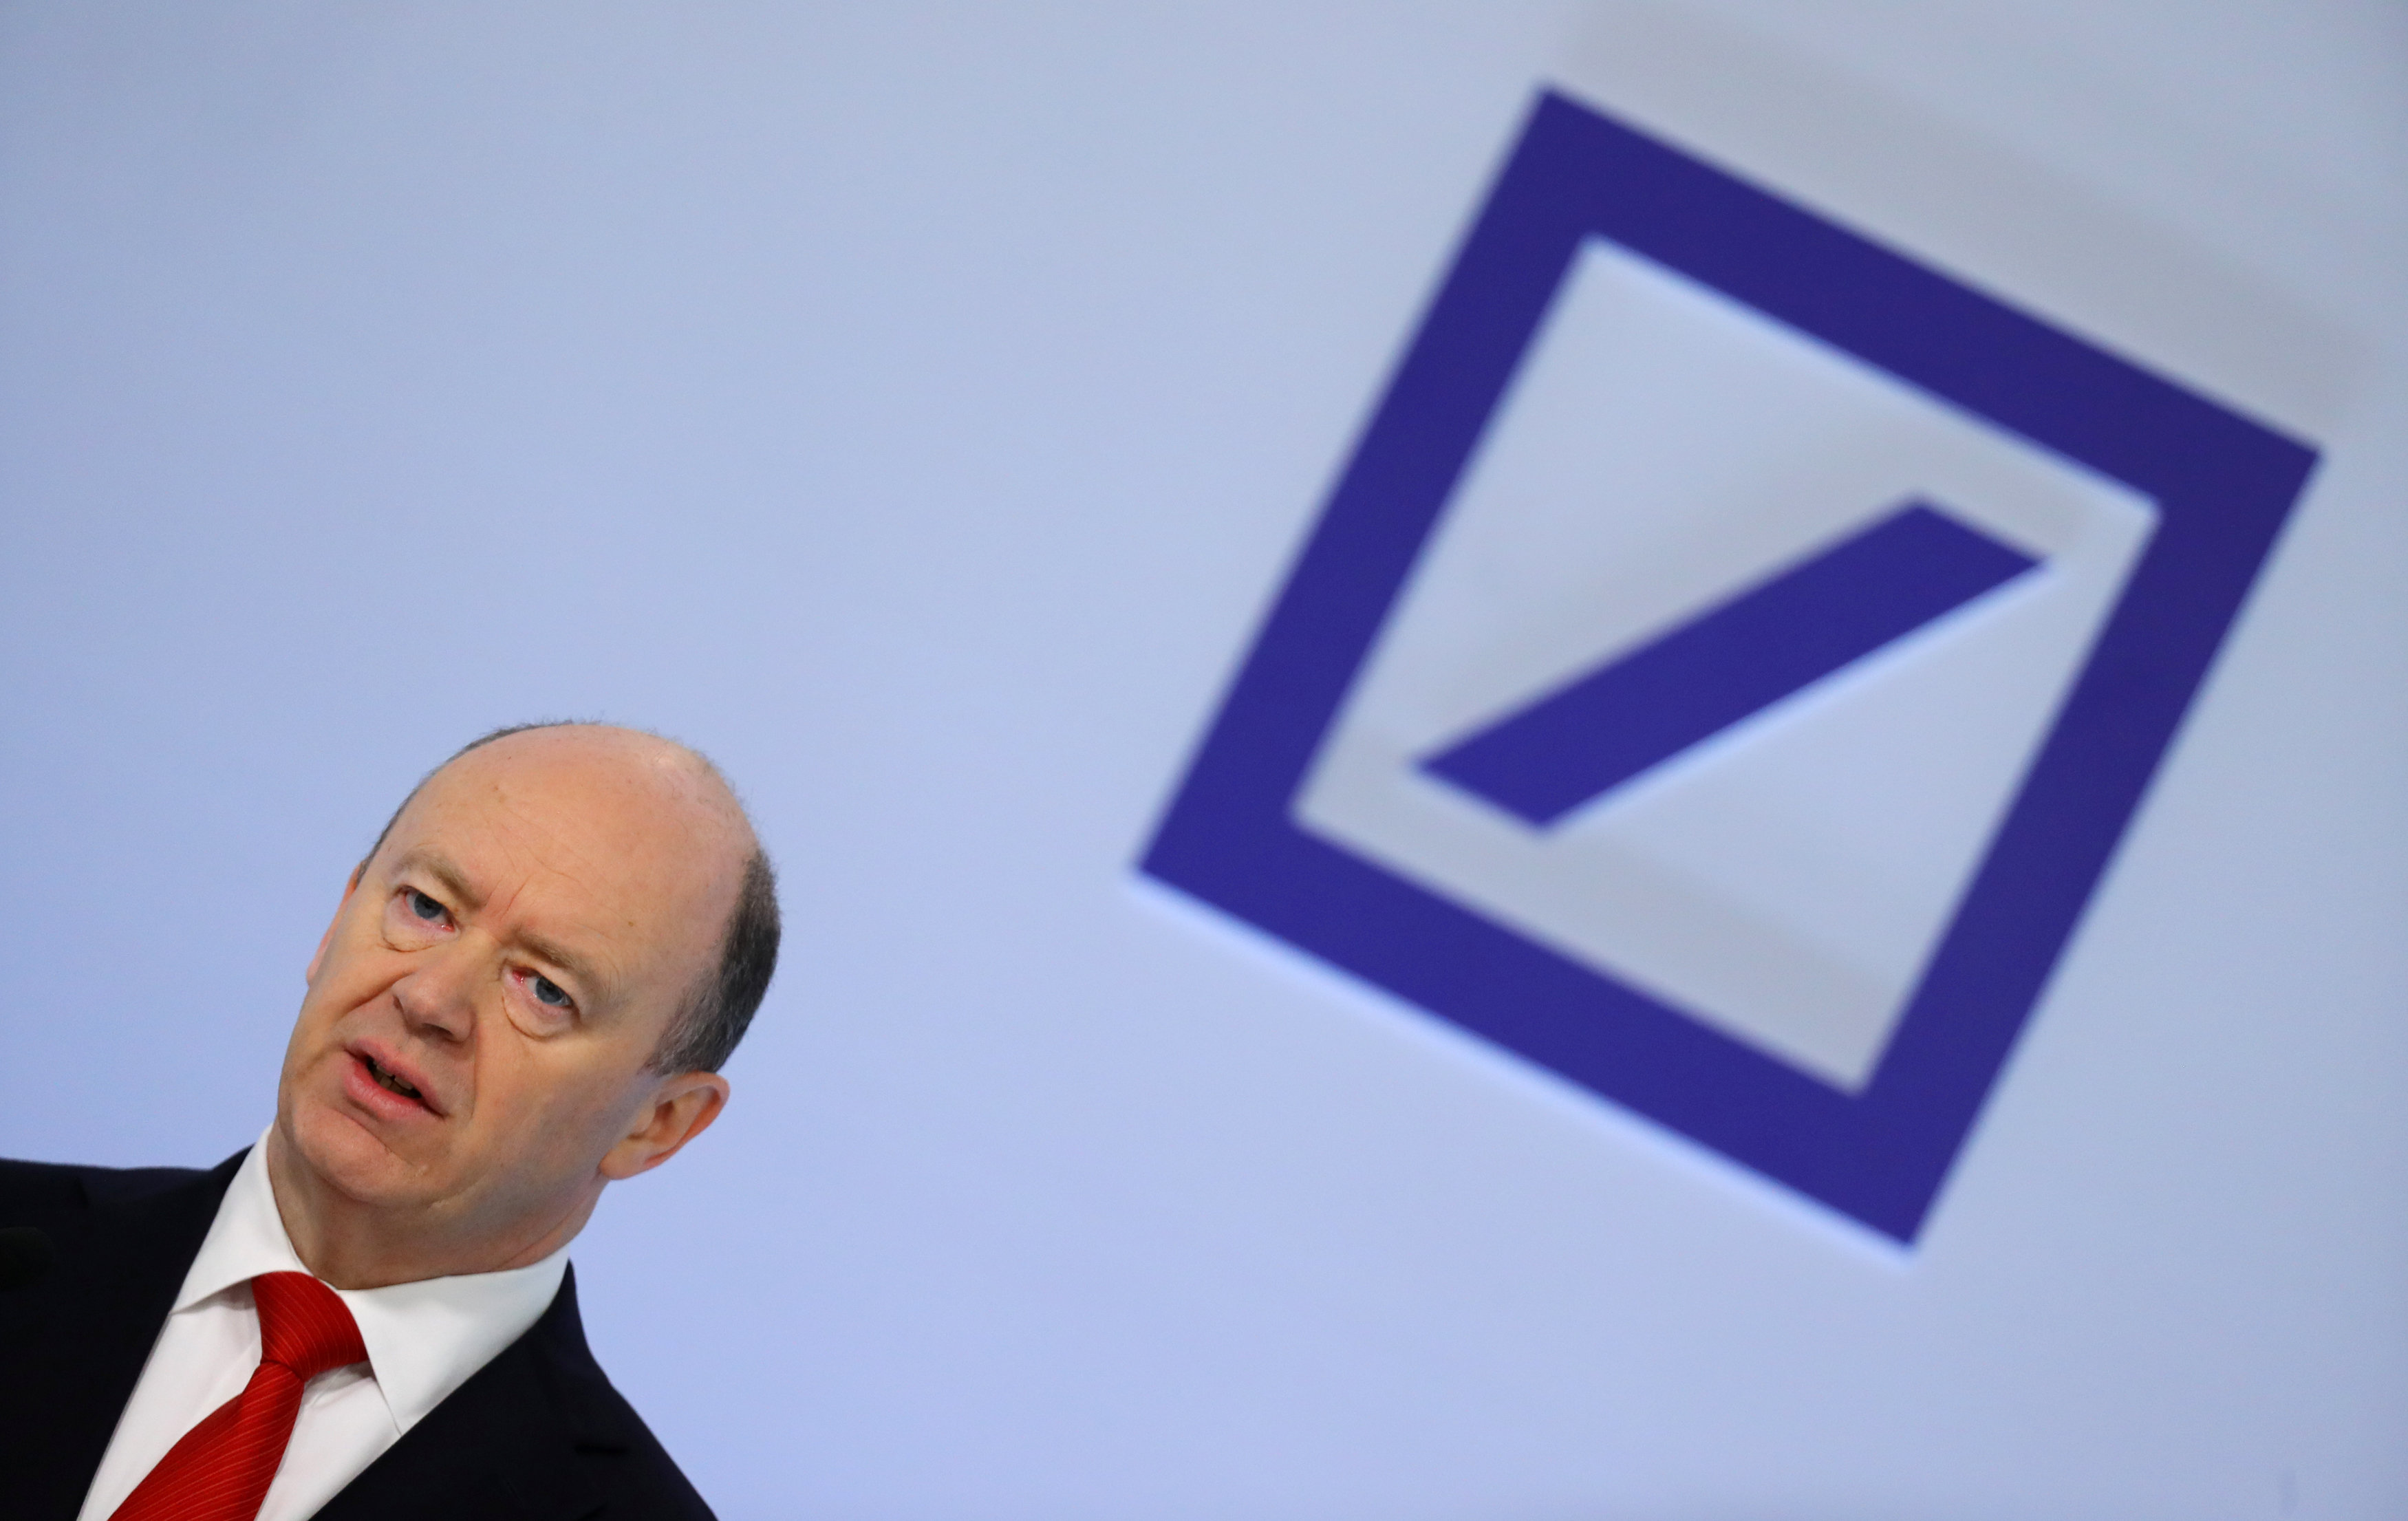 Deutsche Bank CEO faces board grilling on turnaround progress